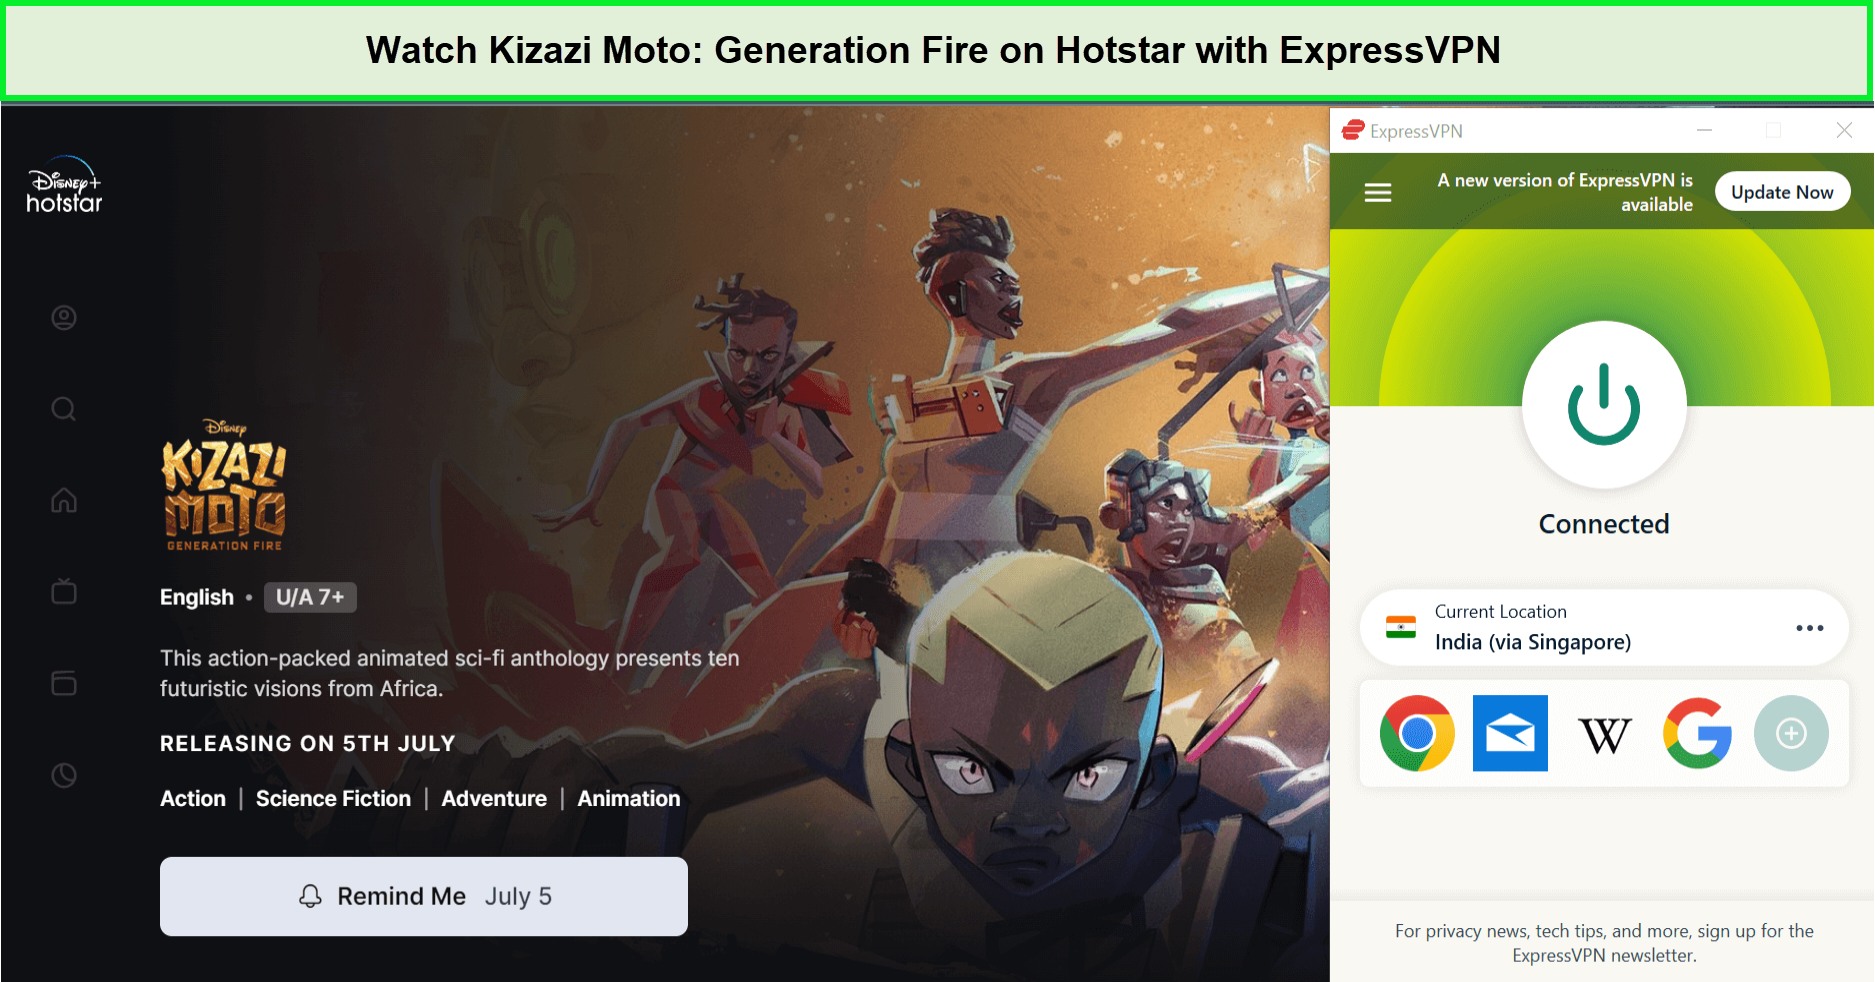 Watch-Kizazi-Moto-Generation-Fire-in-Hong Kong-on-Hotstar-with-ExpressVPN